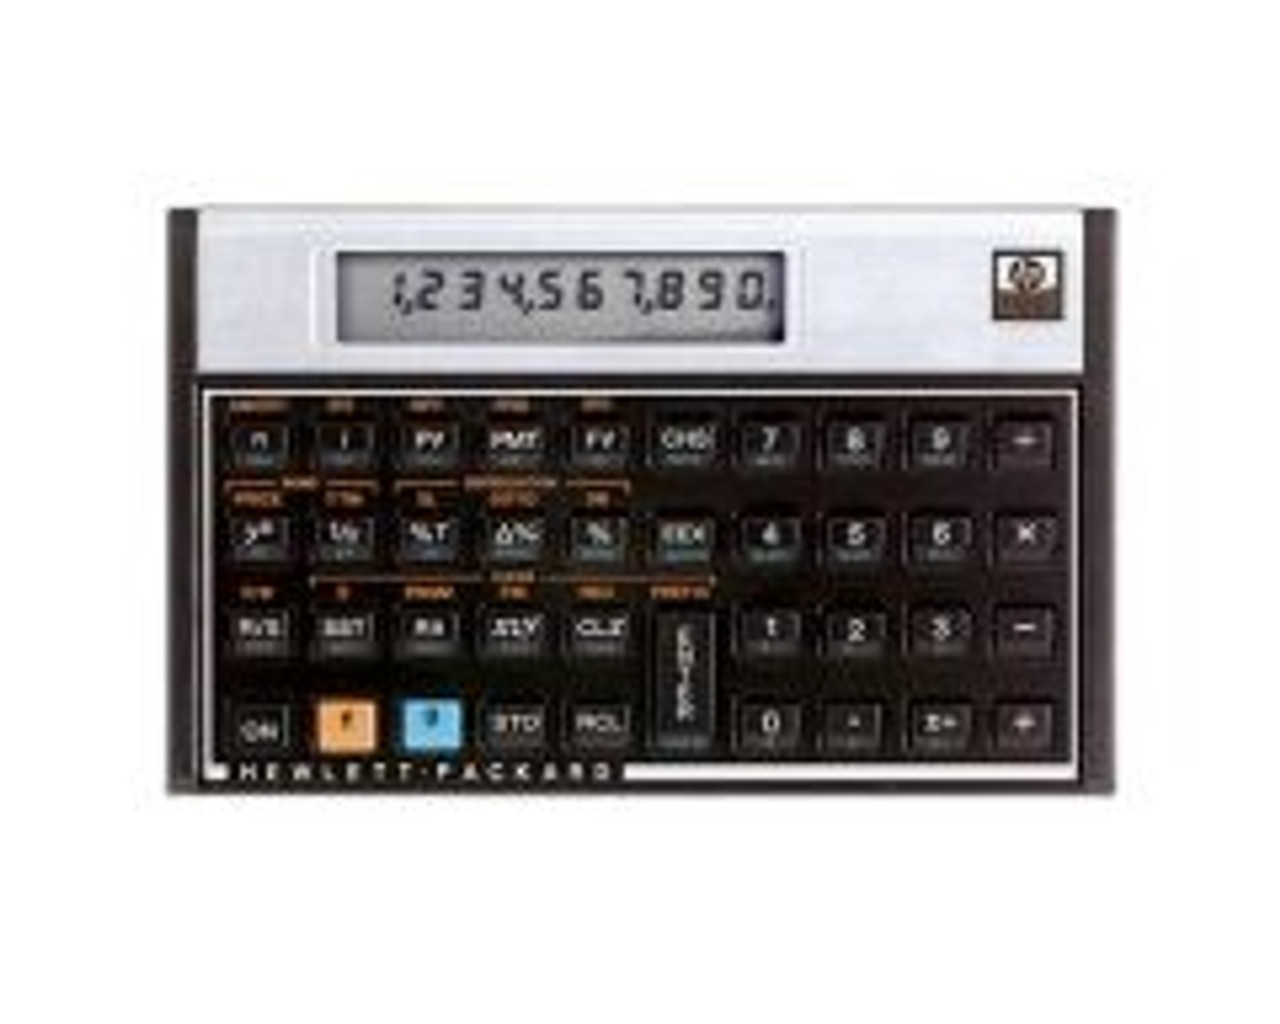 Calculator, Financial, Handheld, Stats/Math, HP12C